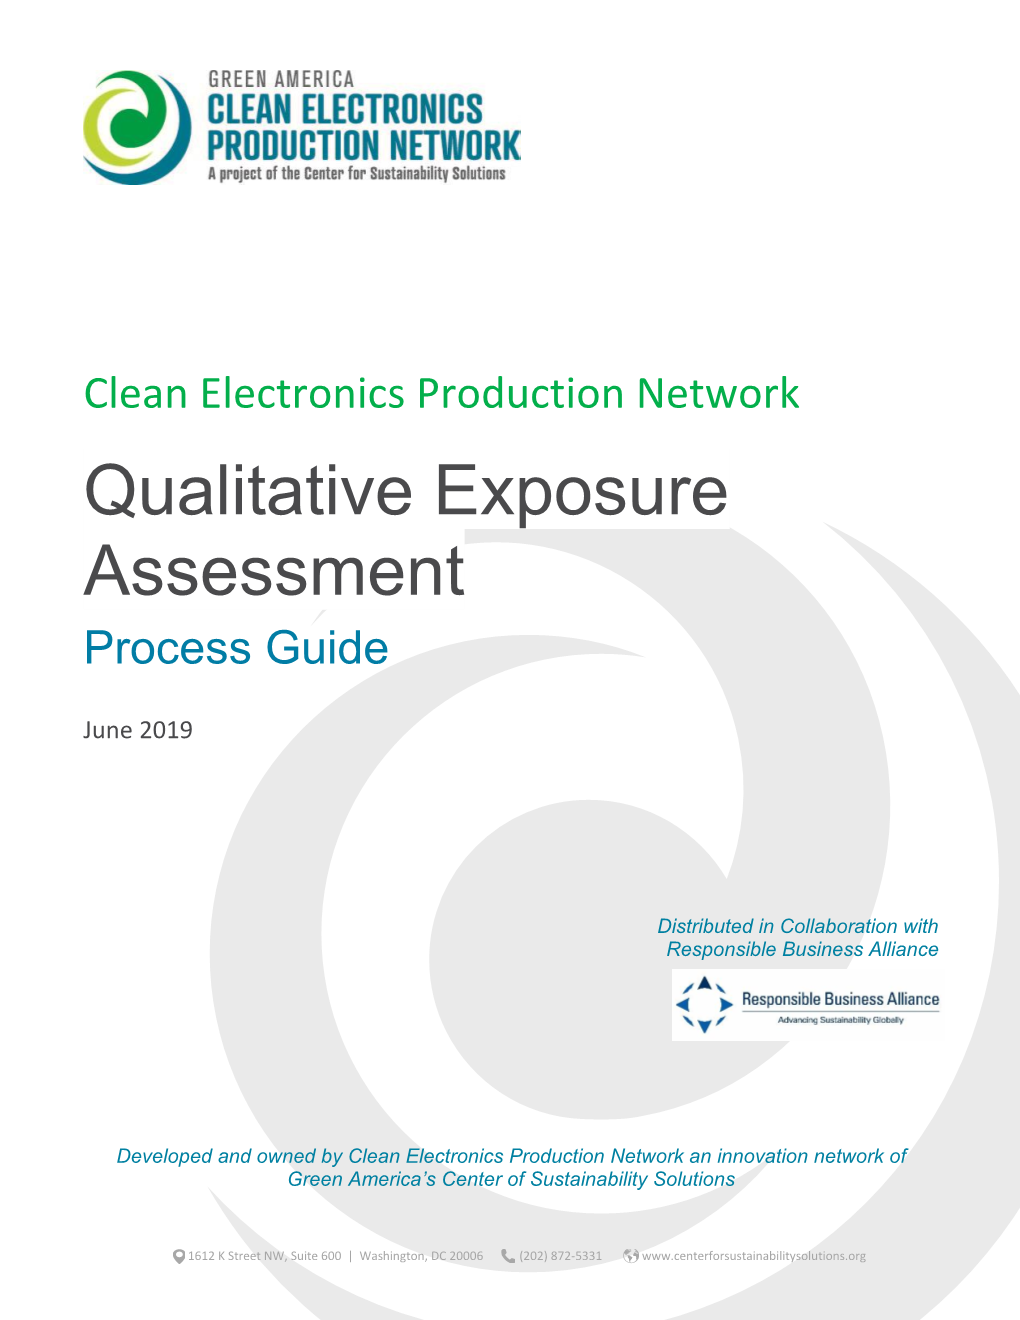 Qualitative Exposure Assessment Process Guide